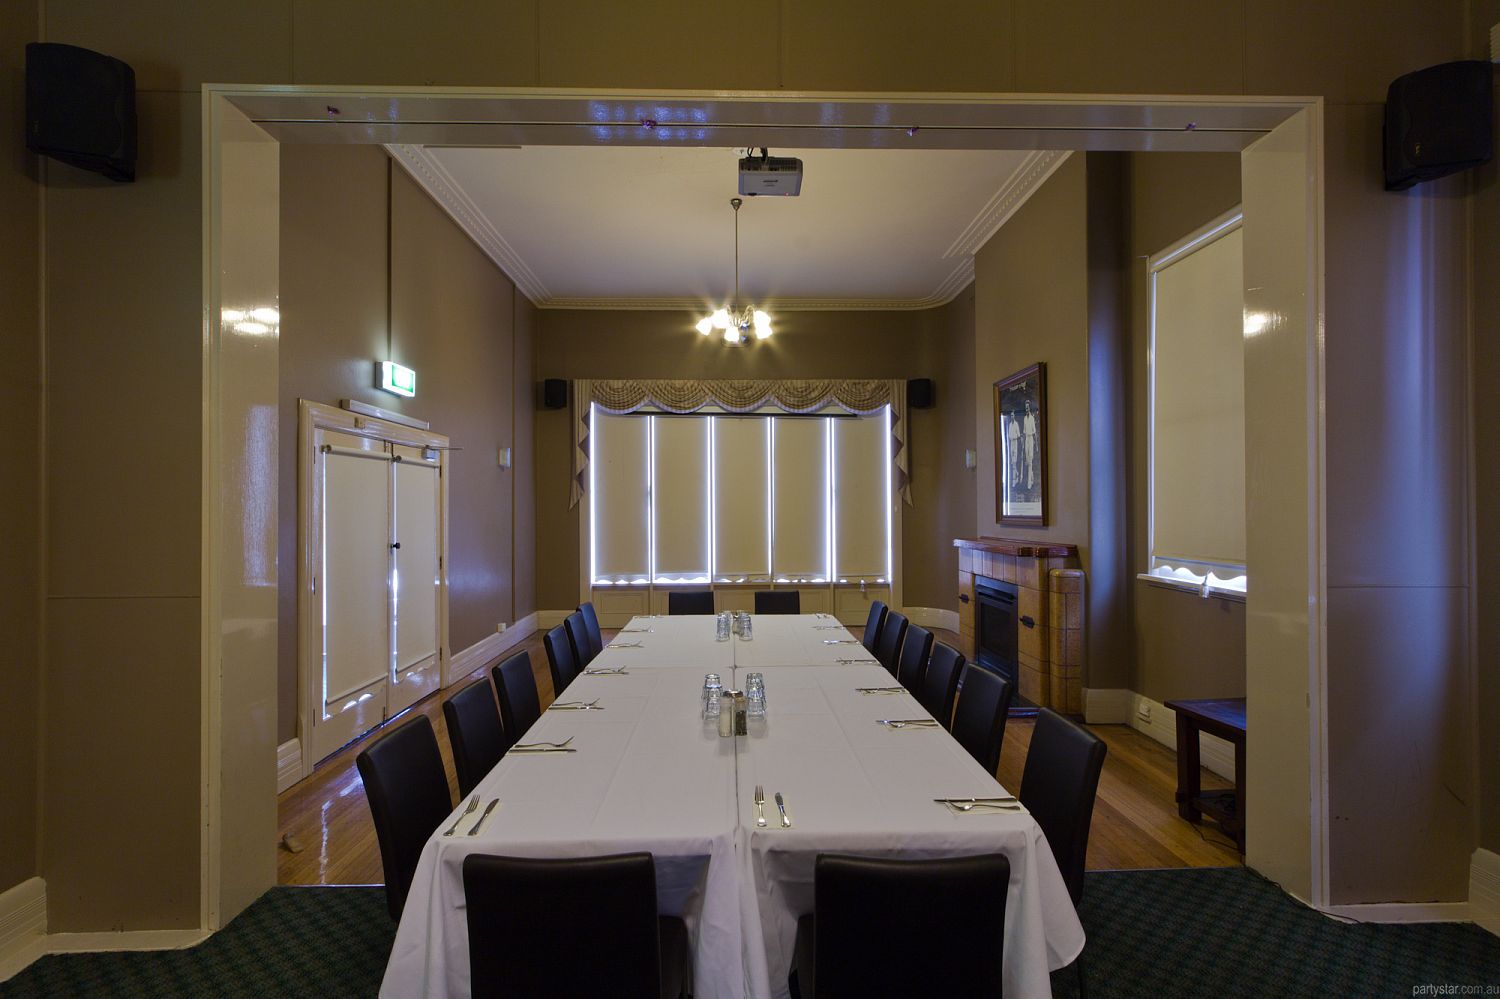 Oscar's Hotel, Ballarat, VIC. Function Room hire photo #3